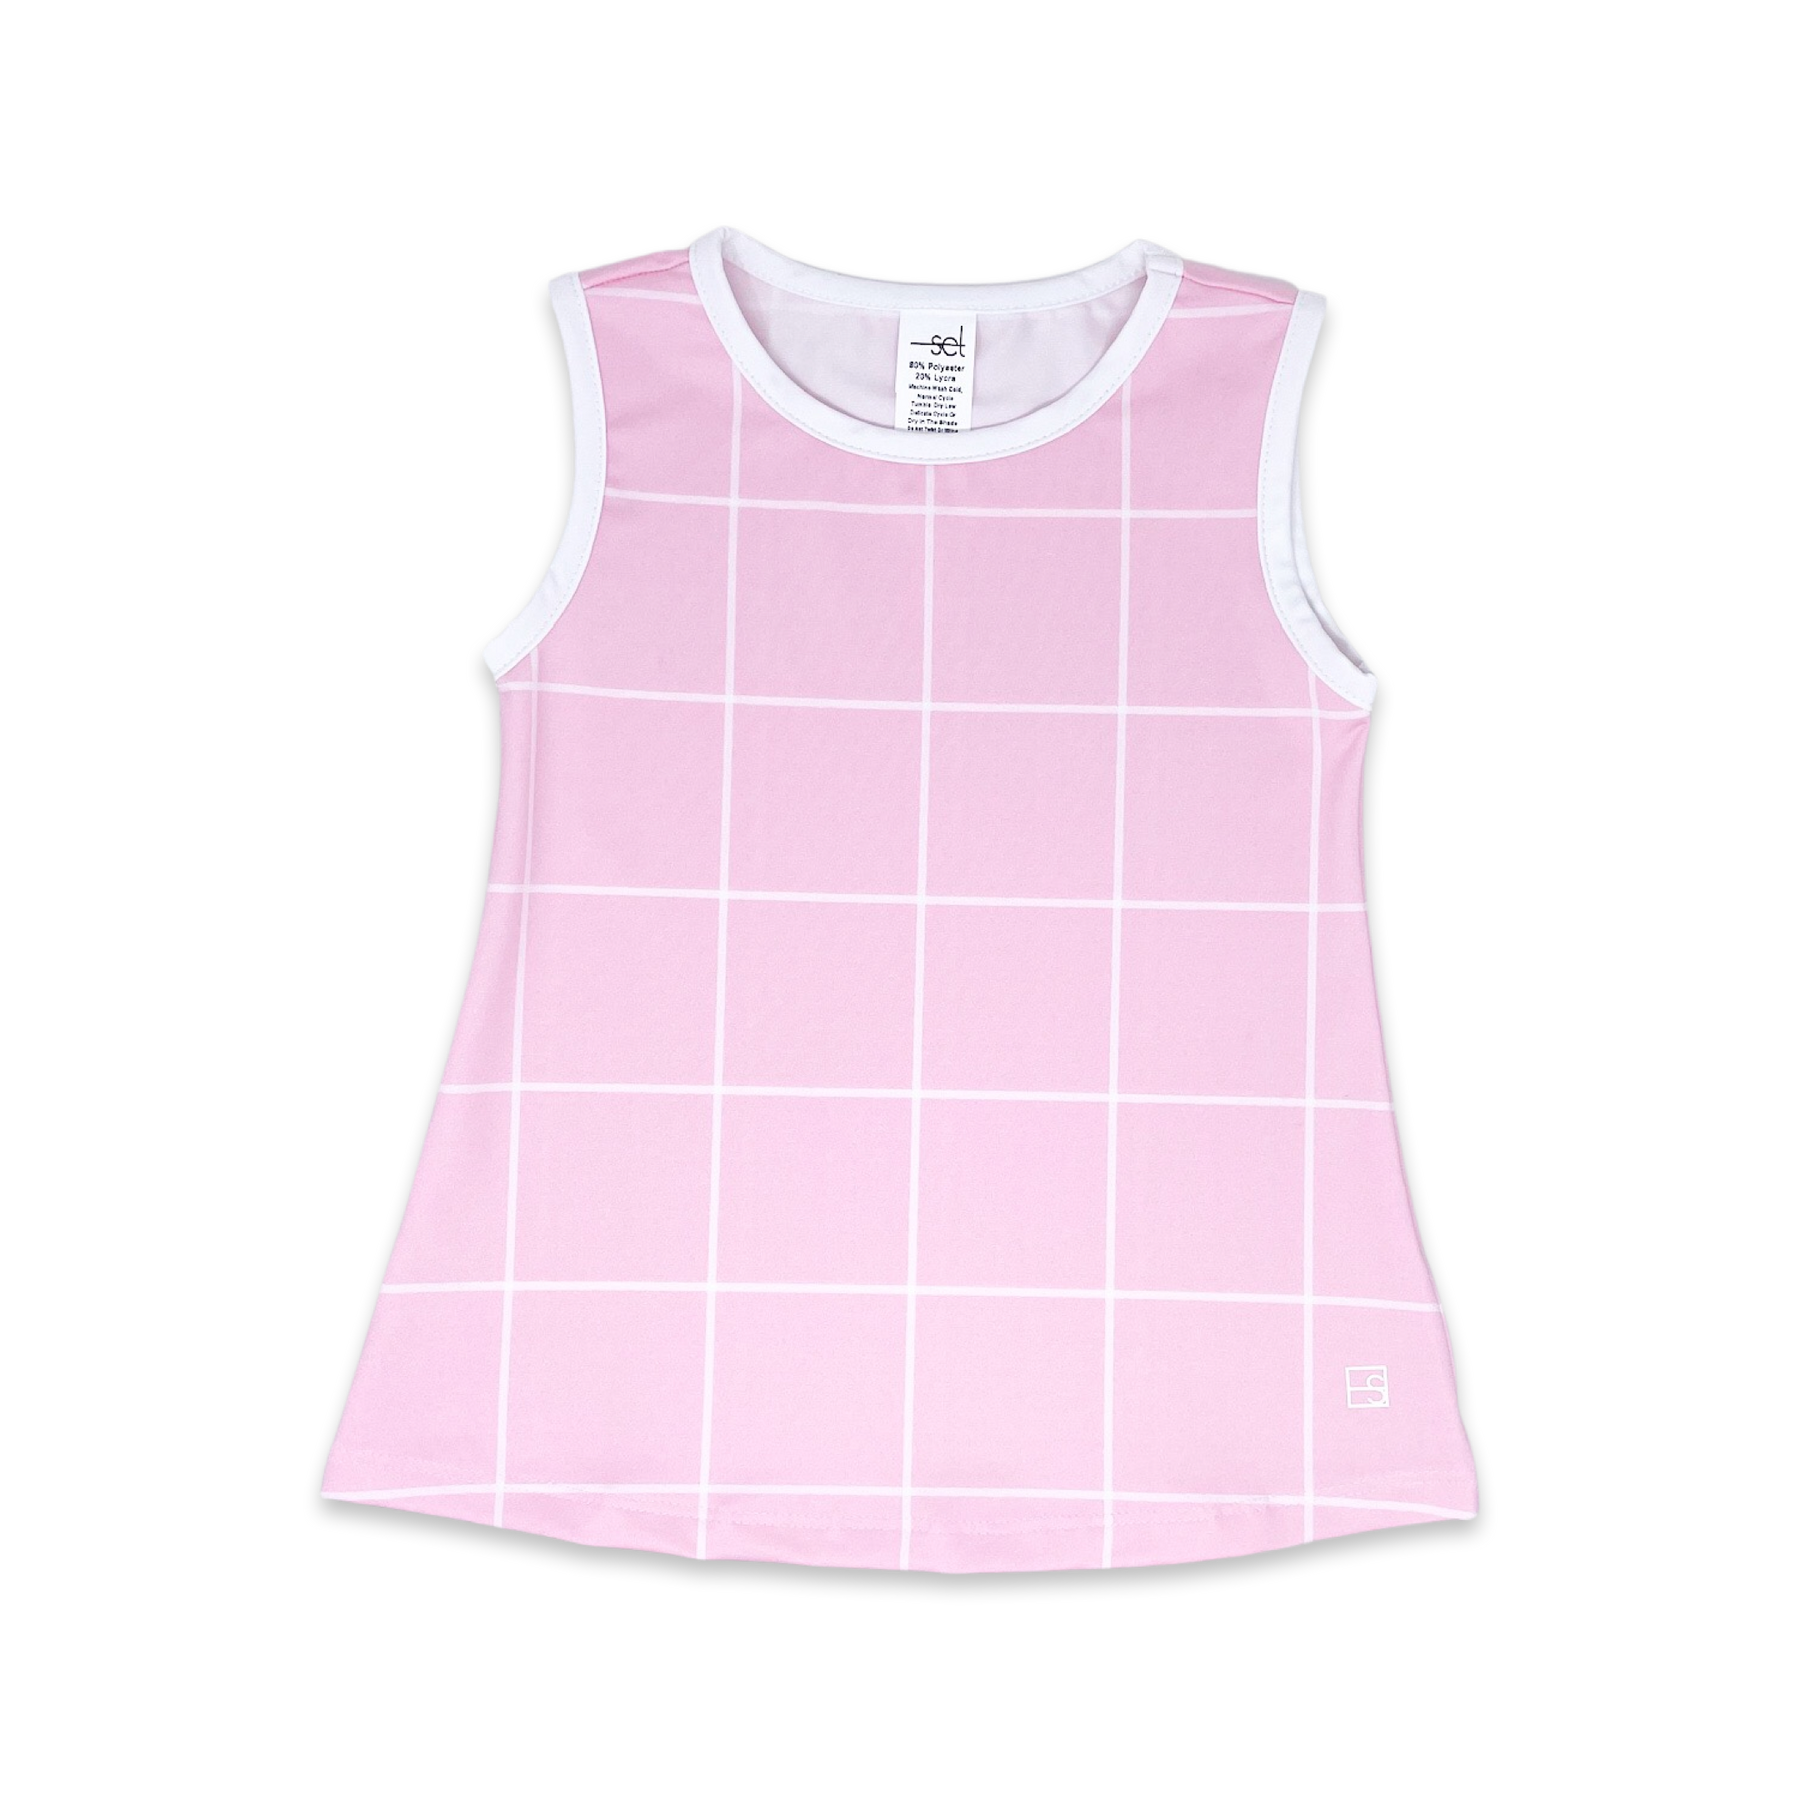 Set Athleisure Tori Tank - Pink Windowpane, Pure Coconut